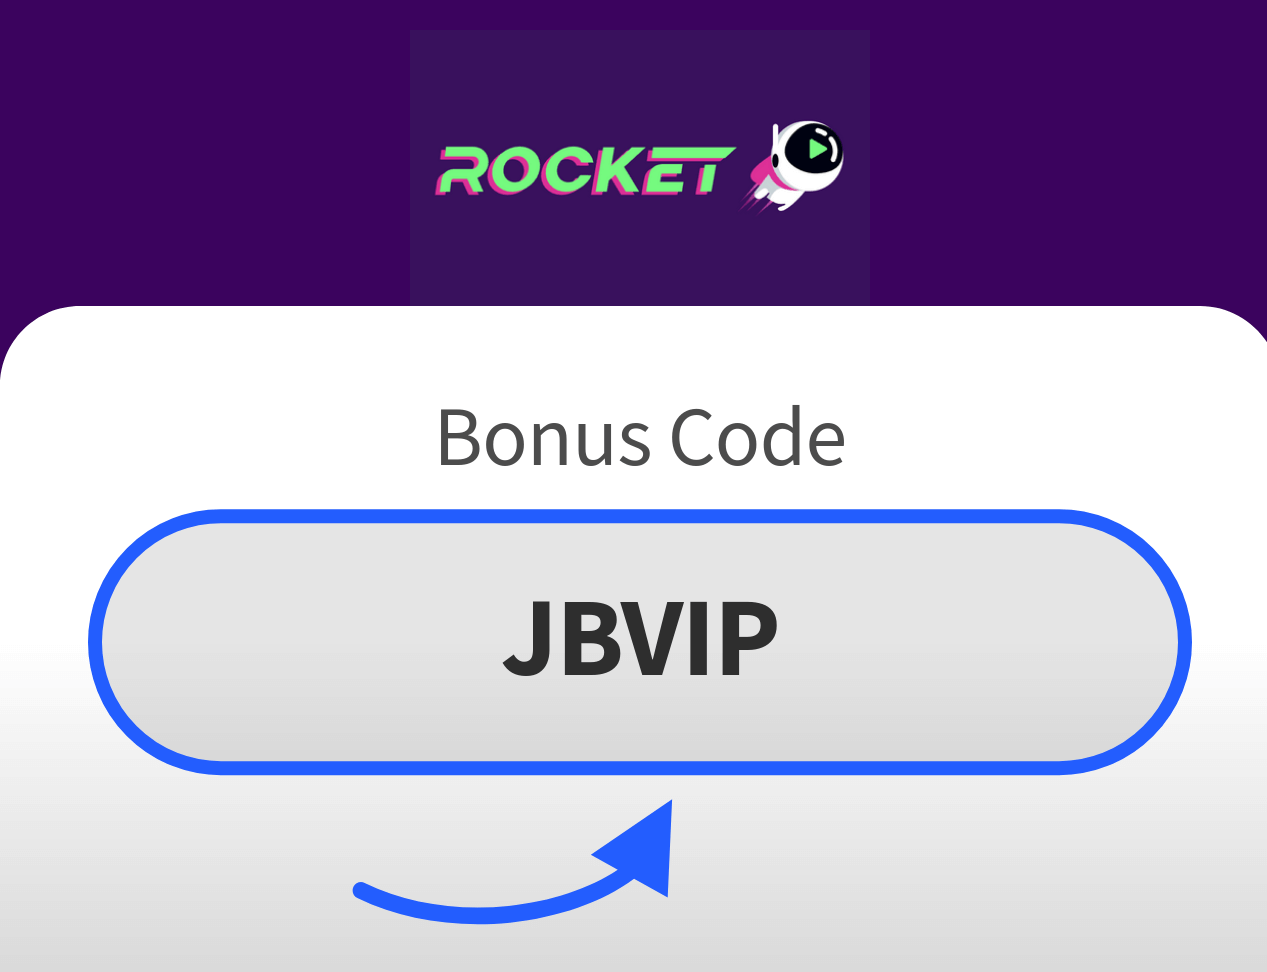 Casino Rocket Bonus Code